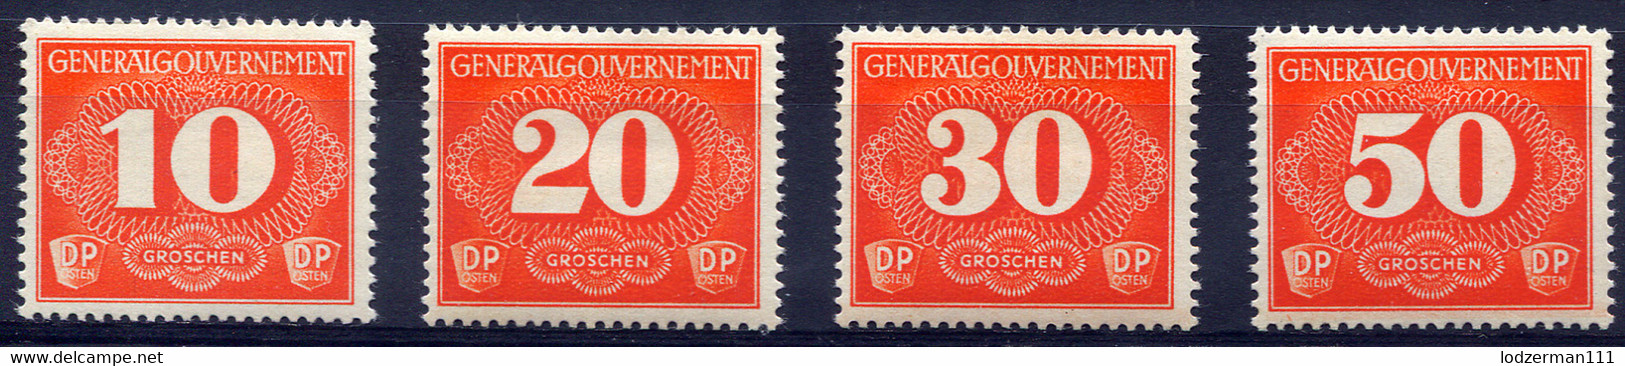 GG Zustellungsmarken 1940 - Mi.1-4 MNH (postfrisch) All VF (perfect) - General Government